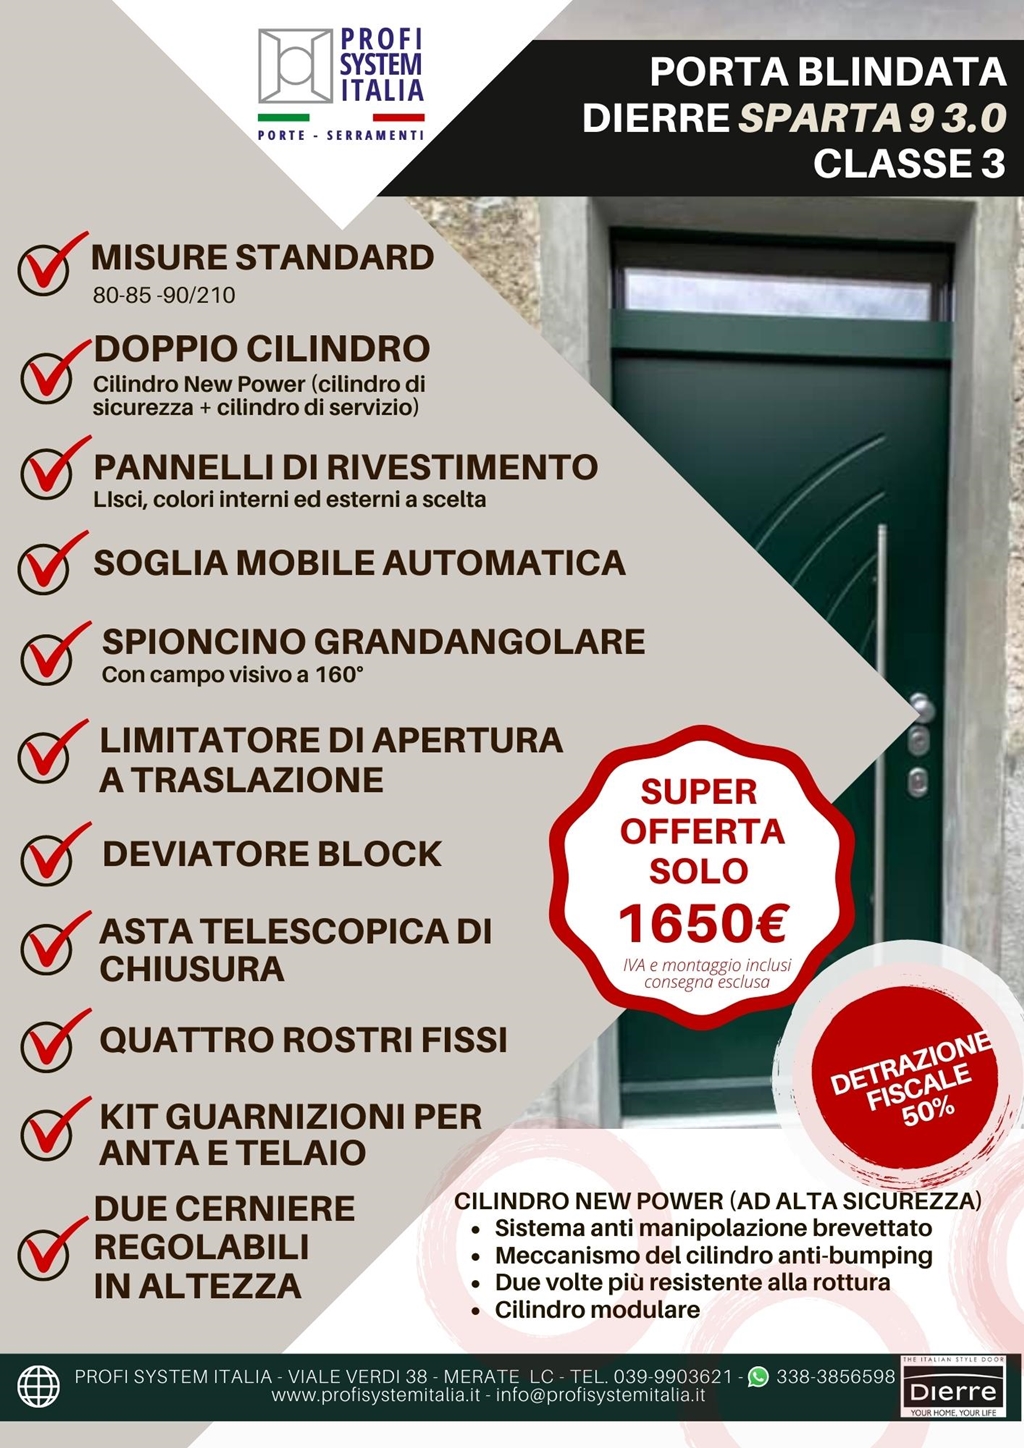 2023-03 Porta blindata Dierre Sparta 9 3.0 – 1540 (1)